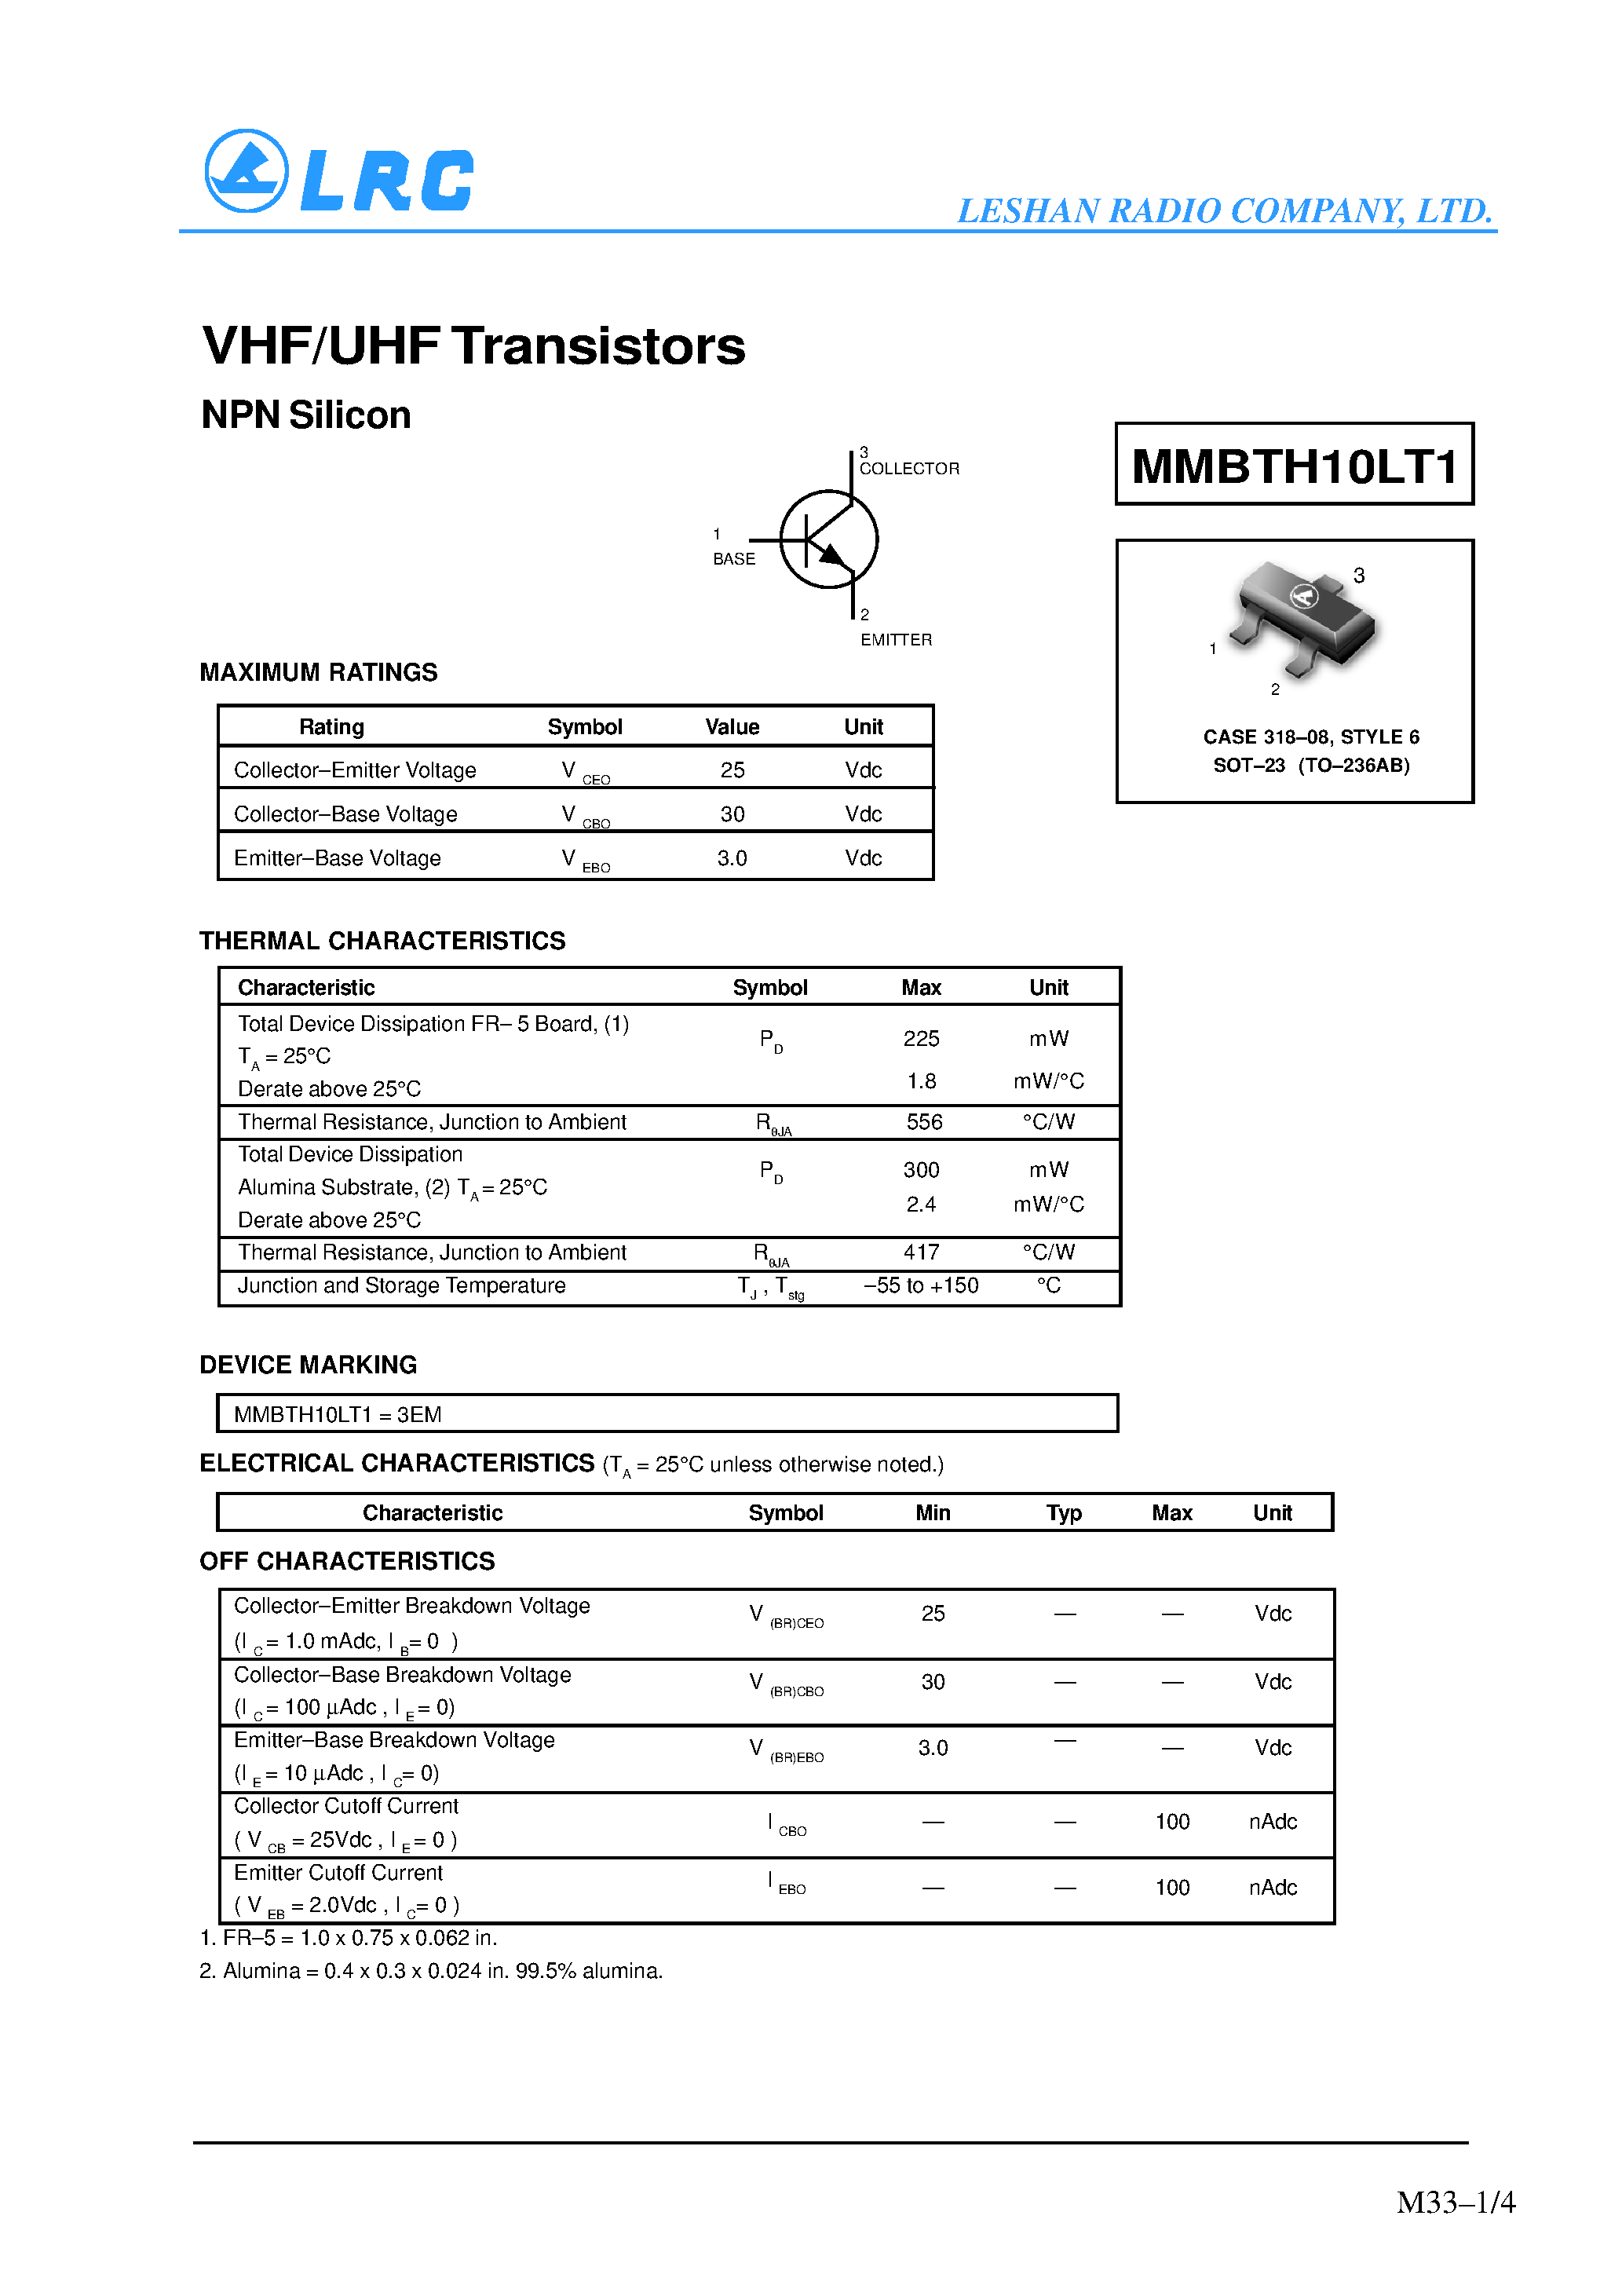 Даташит MMBTH10LT1 - VHF/UHF Transistors(NPN Silicon) страница 1